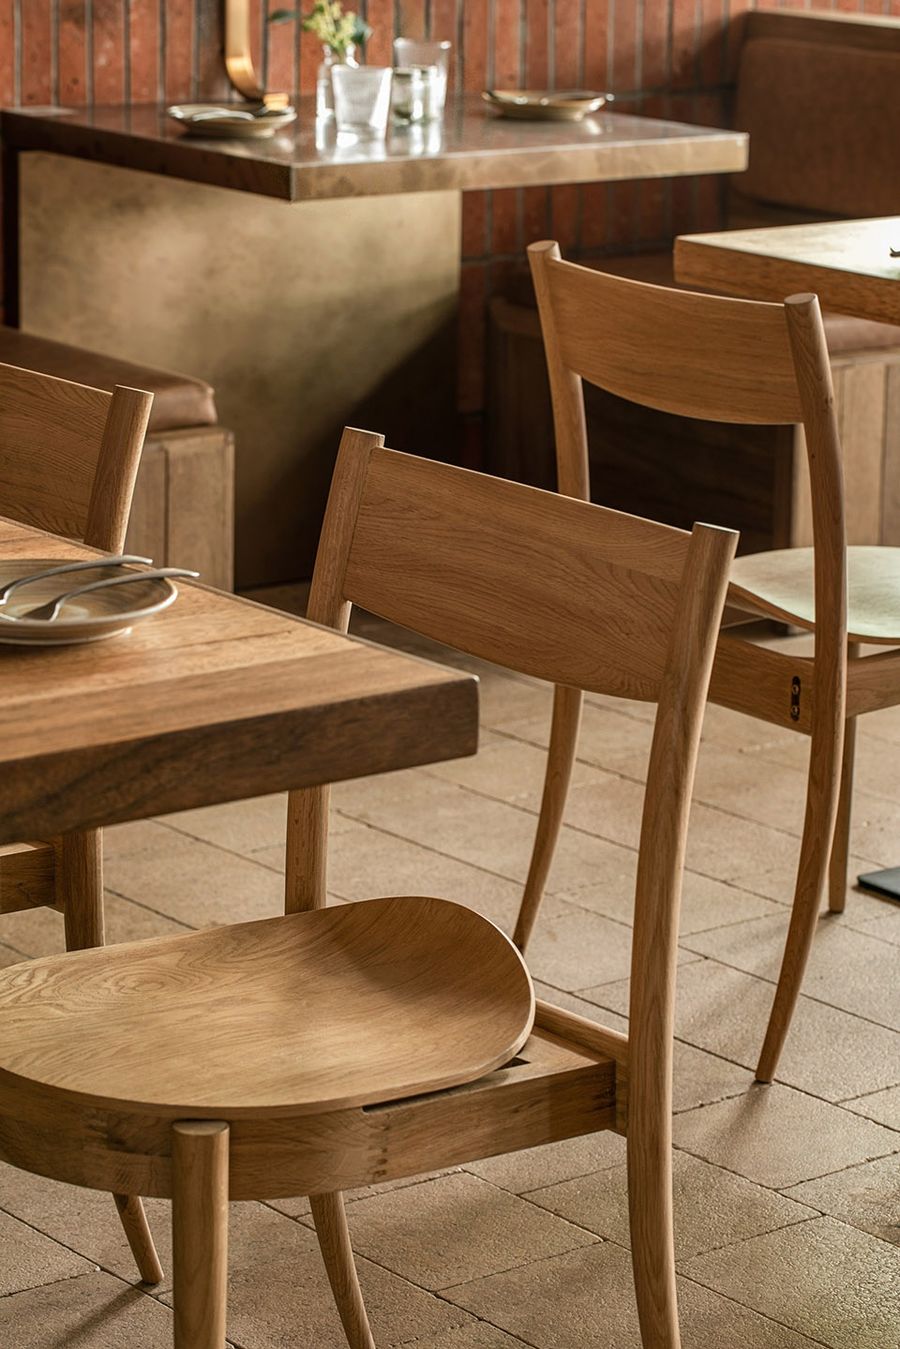 Geemo Design治木设计丨重庆Glass&Plate西餐厅